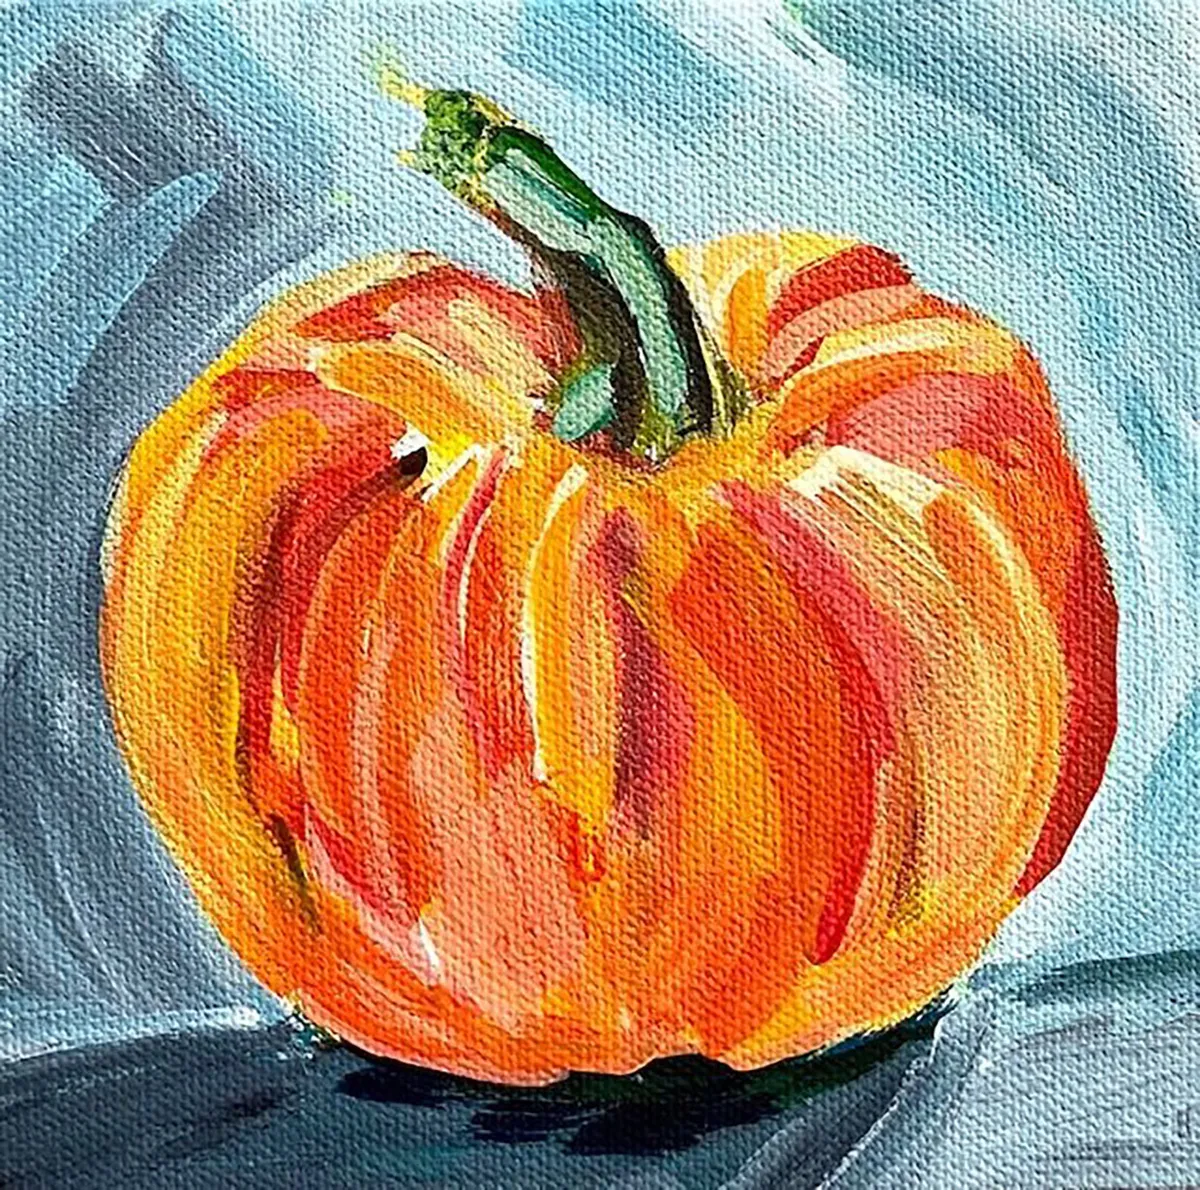 Easy acrylic painting ideas – pumpkin painting on canvas